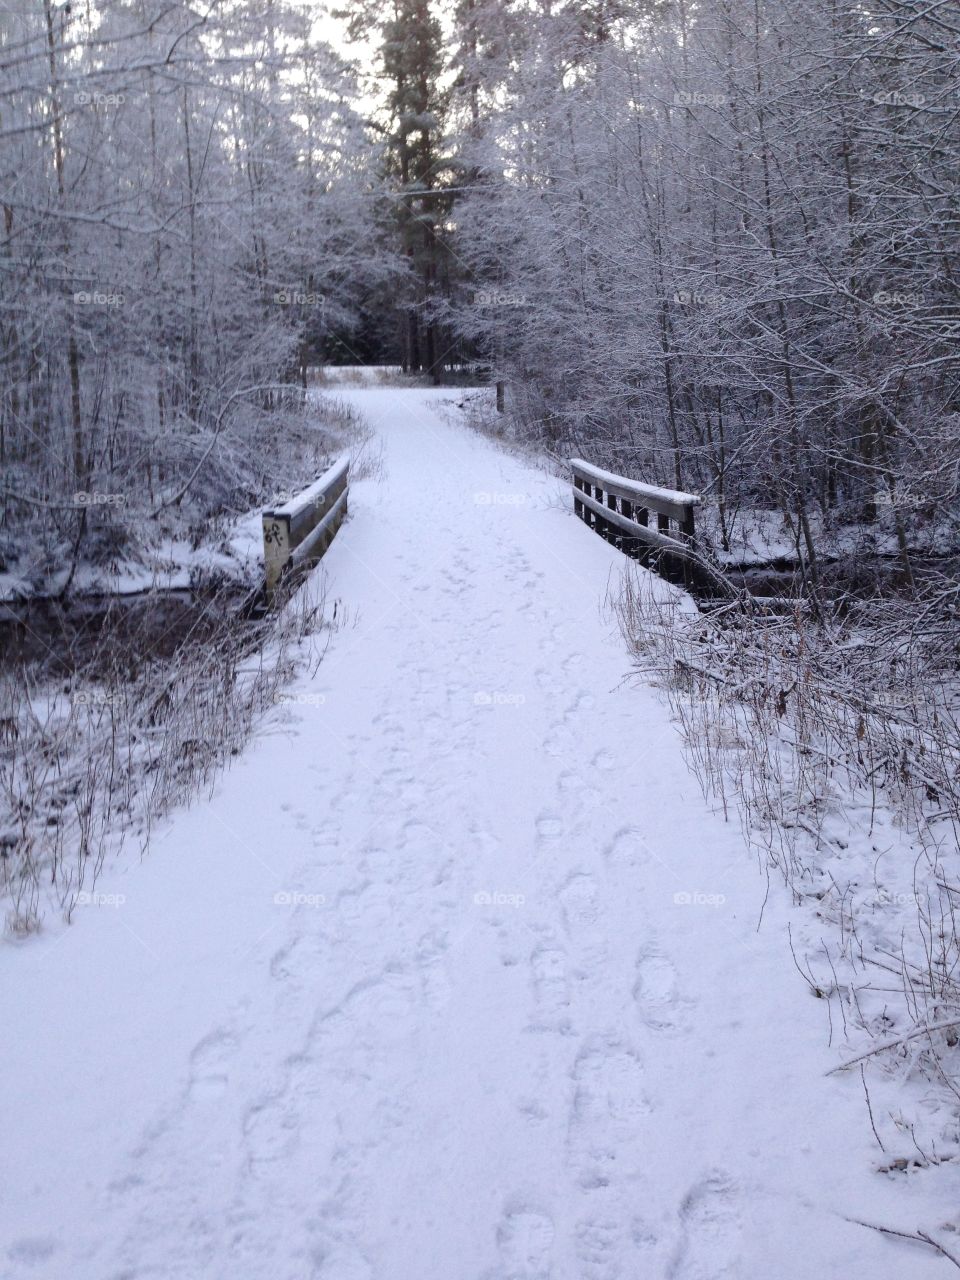 A snowy bridge